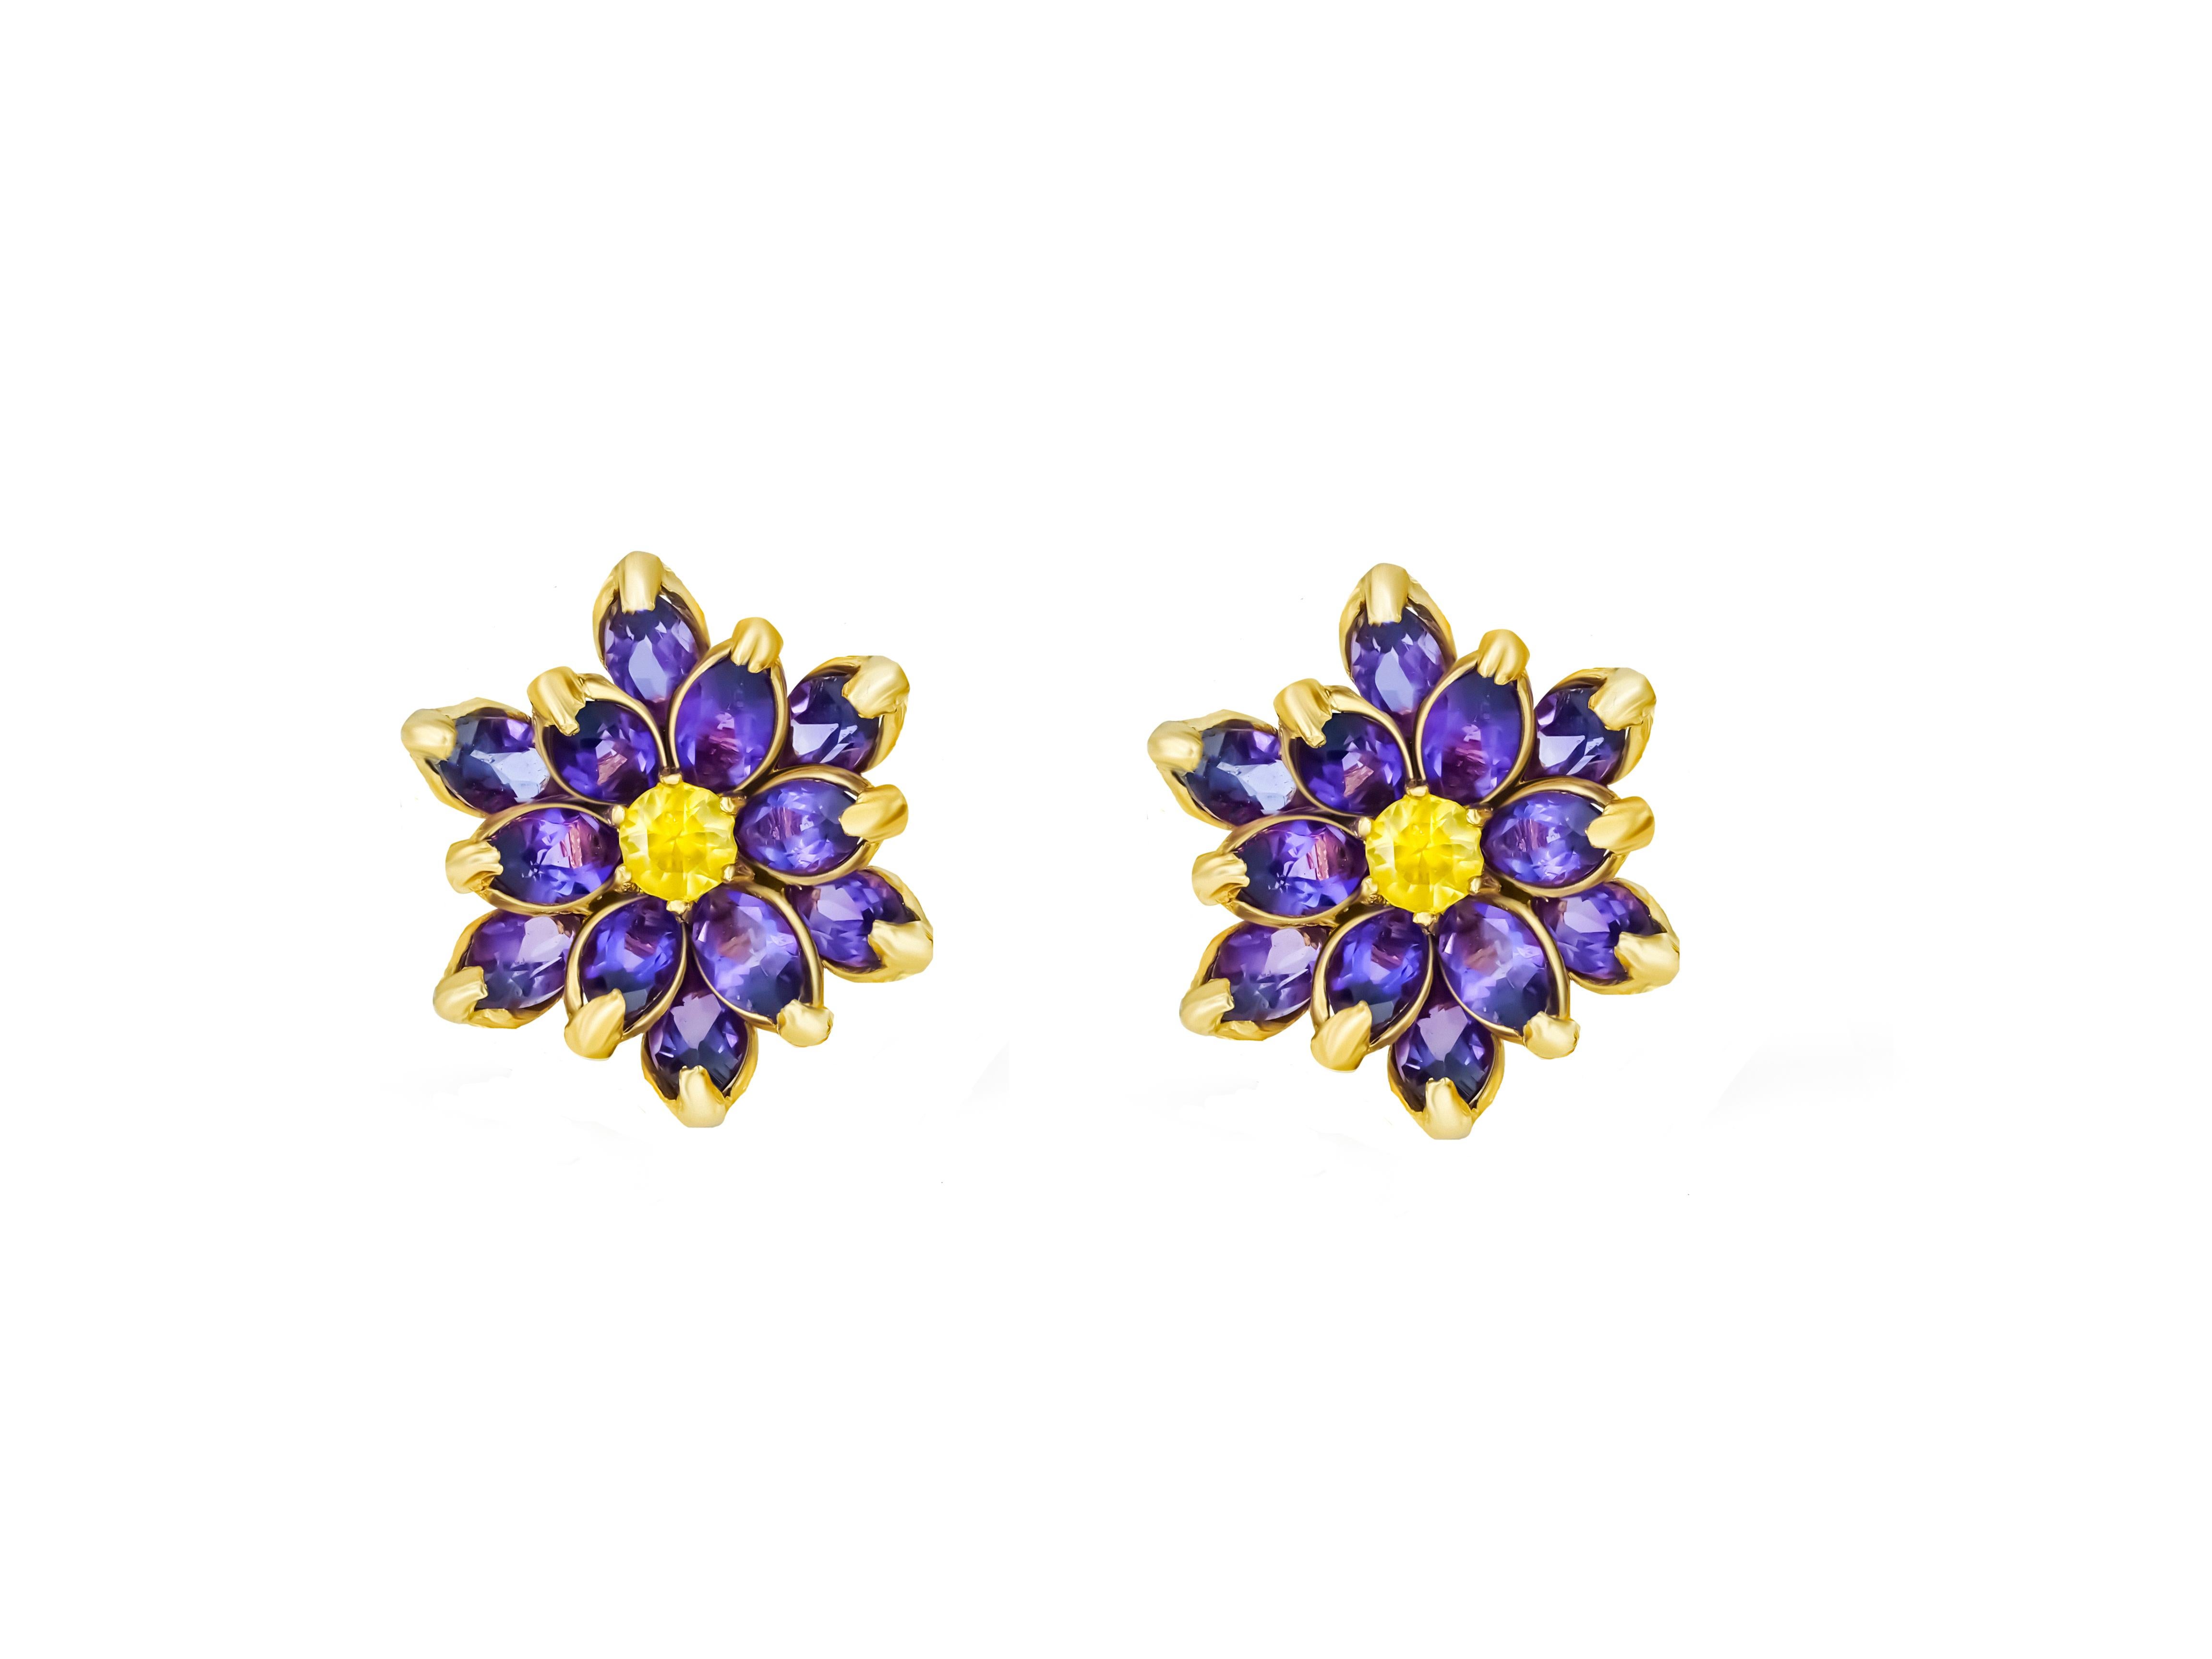 Modern Lotus Flower Earrings Studs in 14K Gold, Amethyst and Sapphires Earrings! For Sale